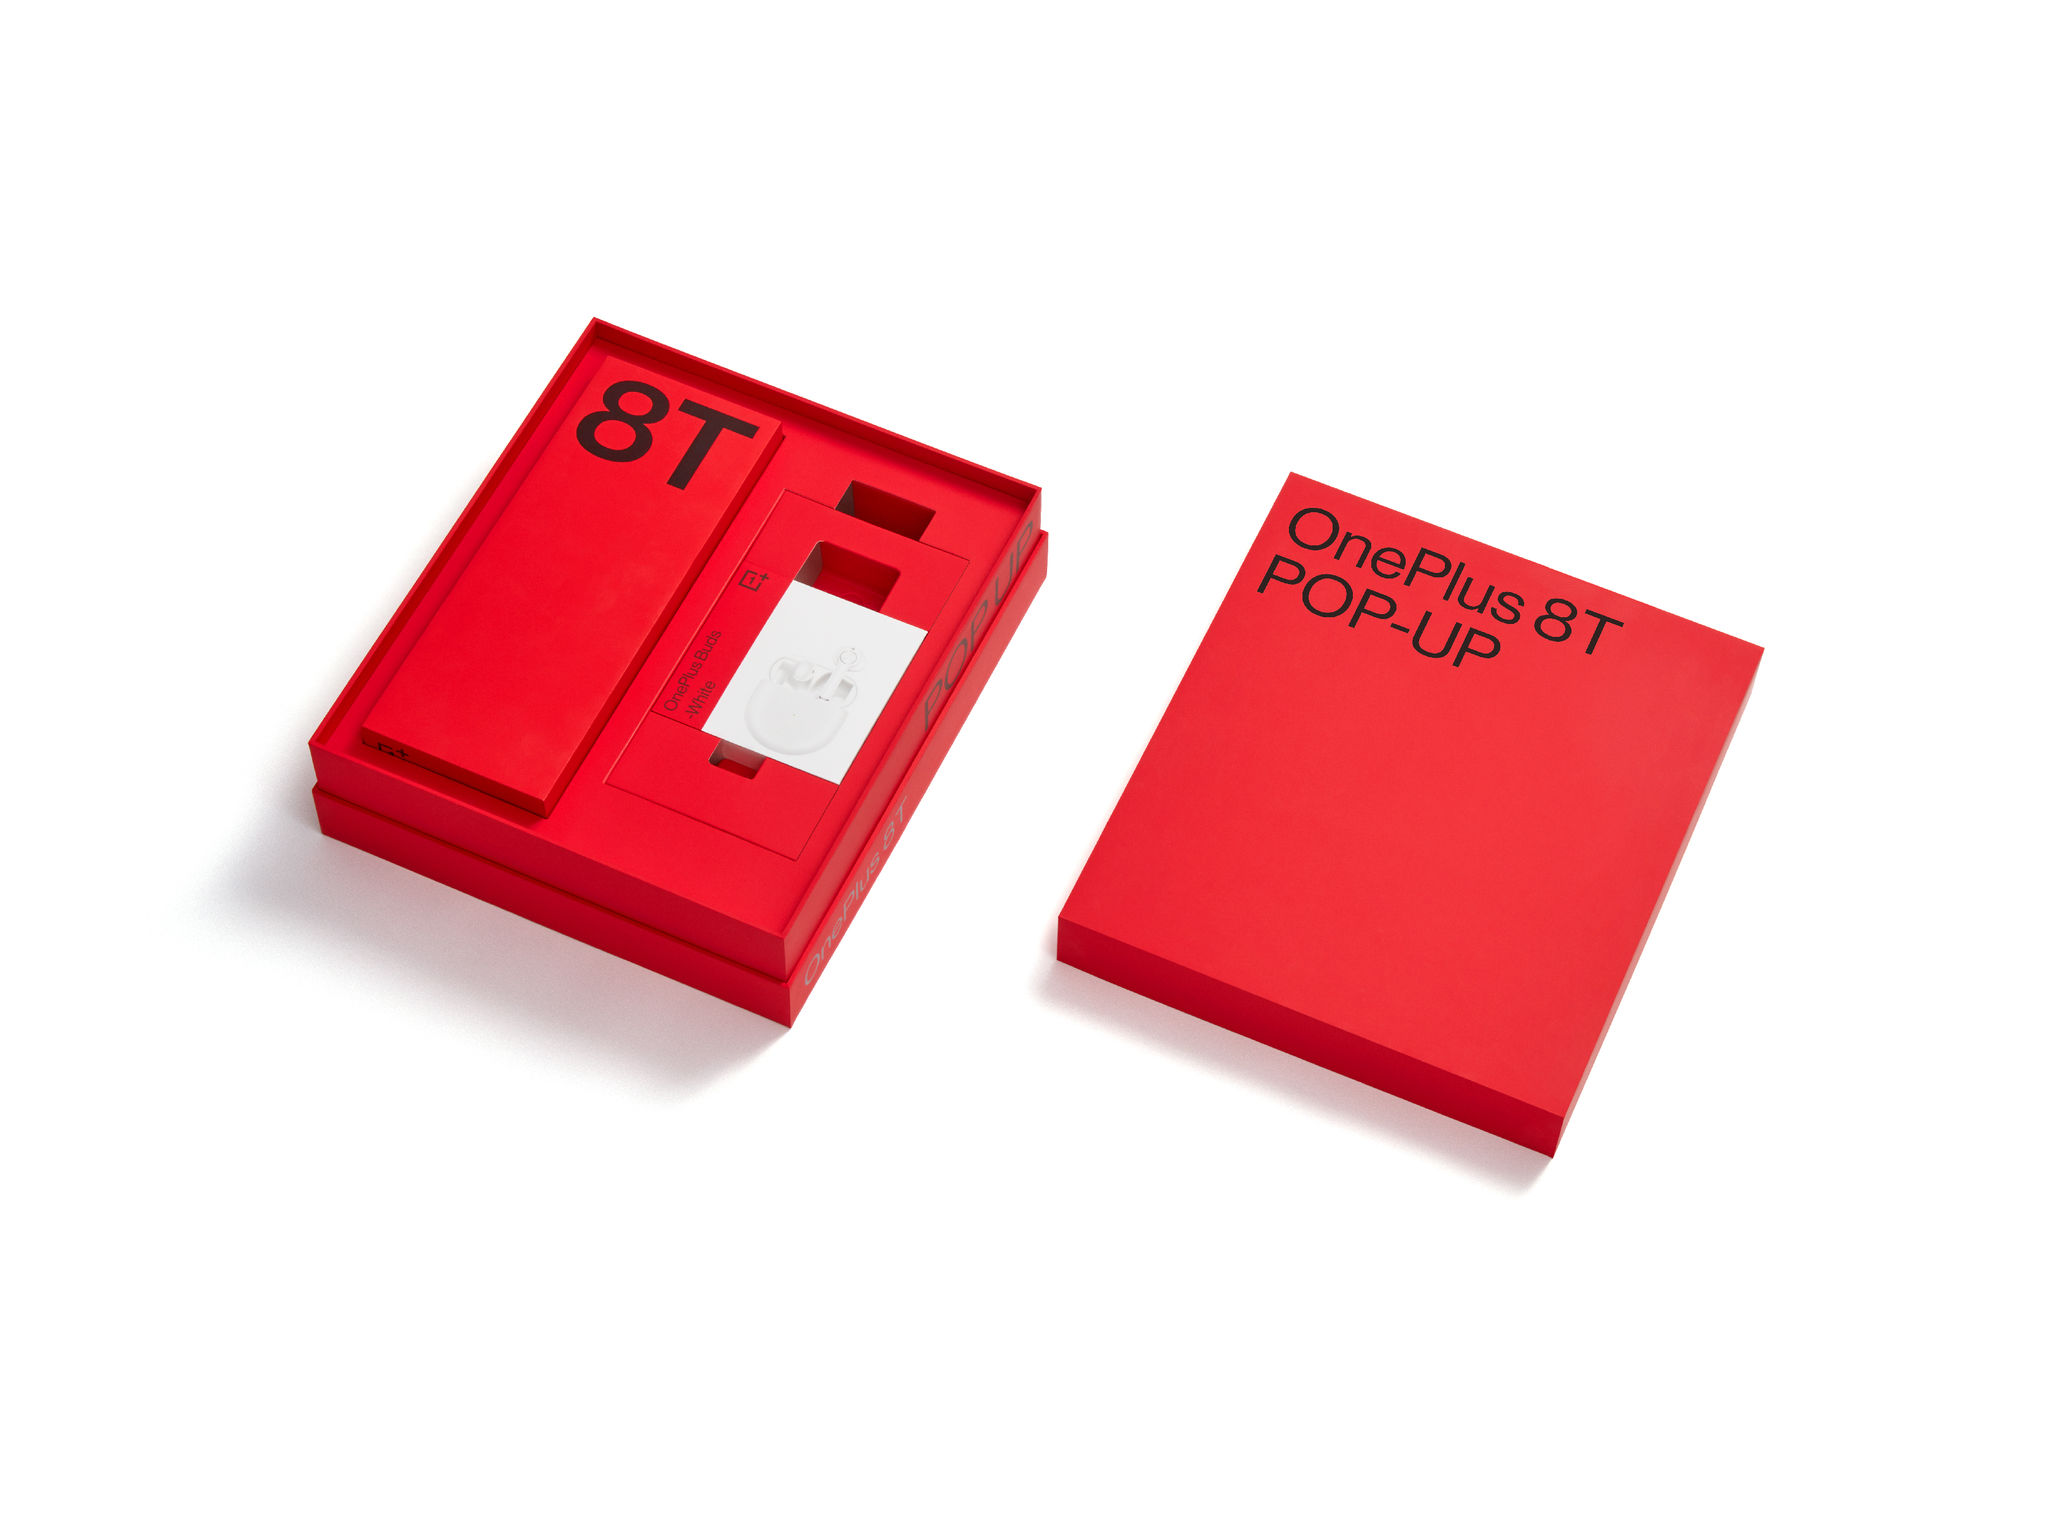 OnePlus 8T Packaging